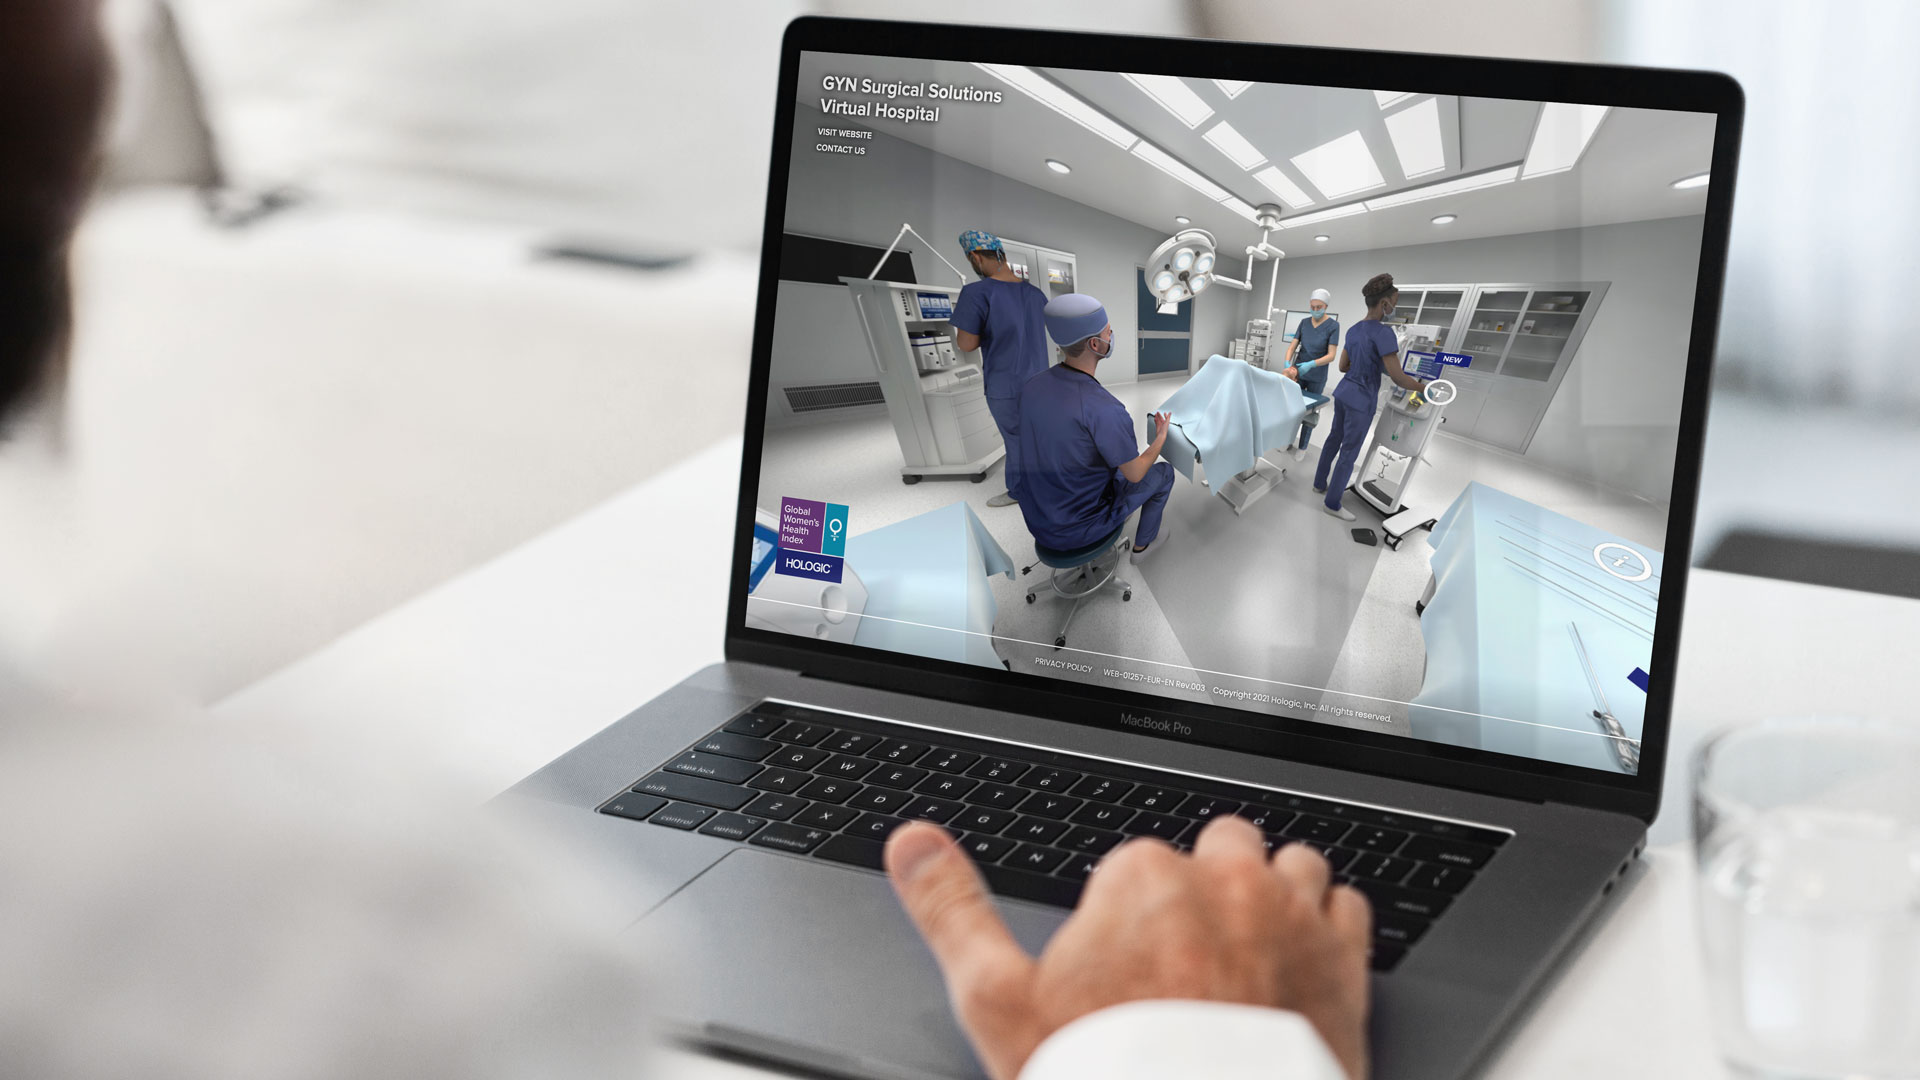 Laptop looking at the GYN virtual hospital environment